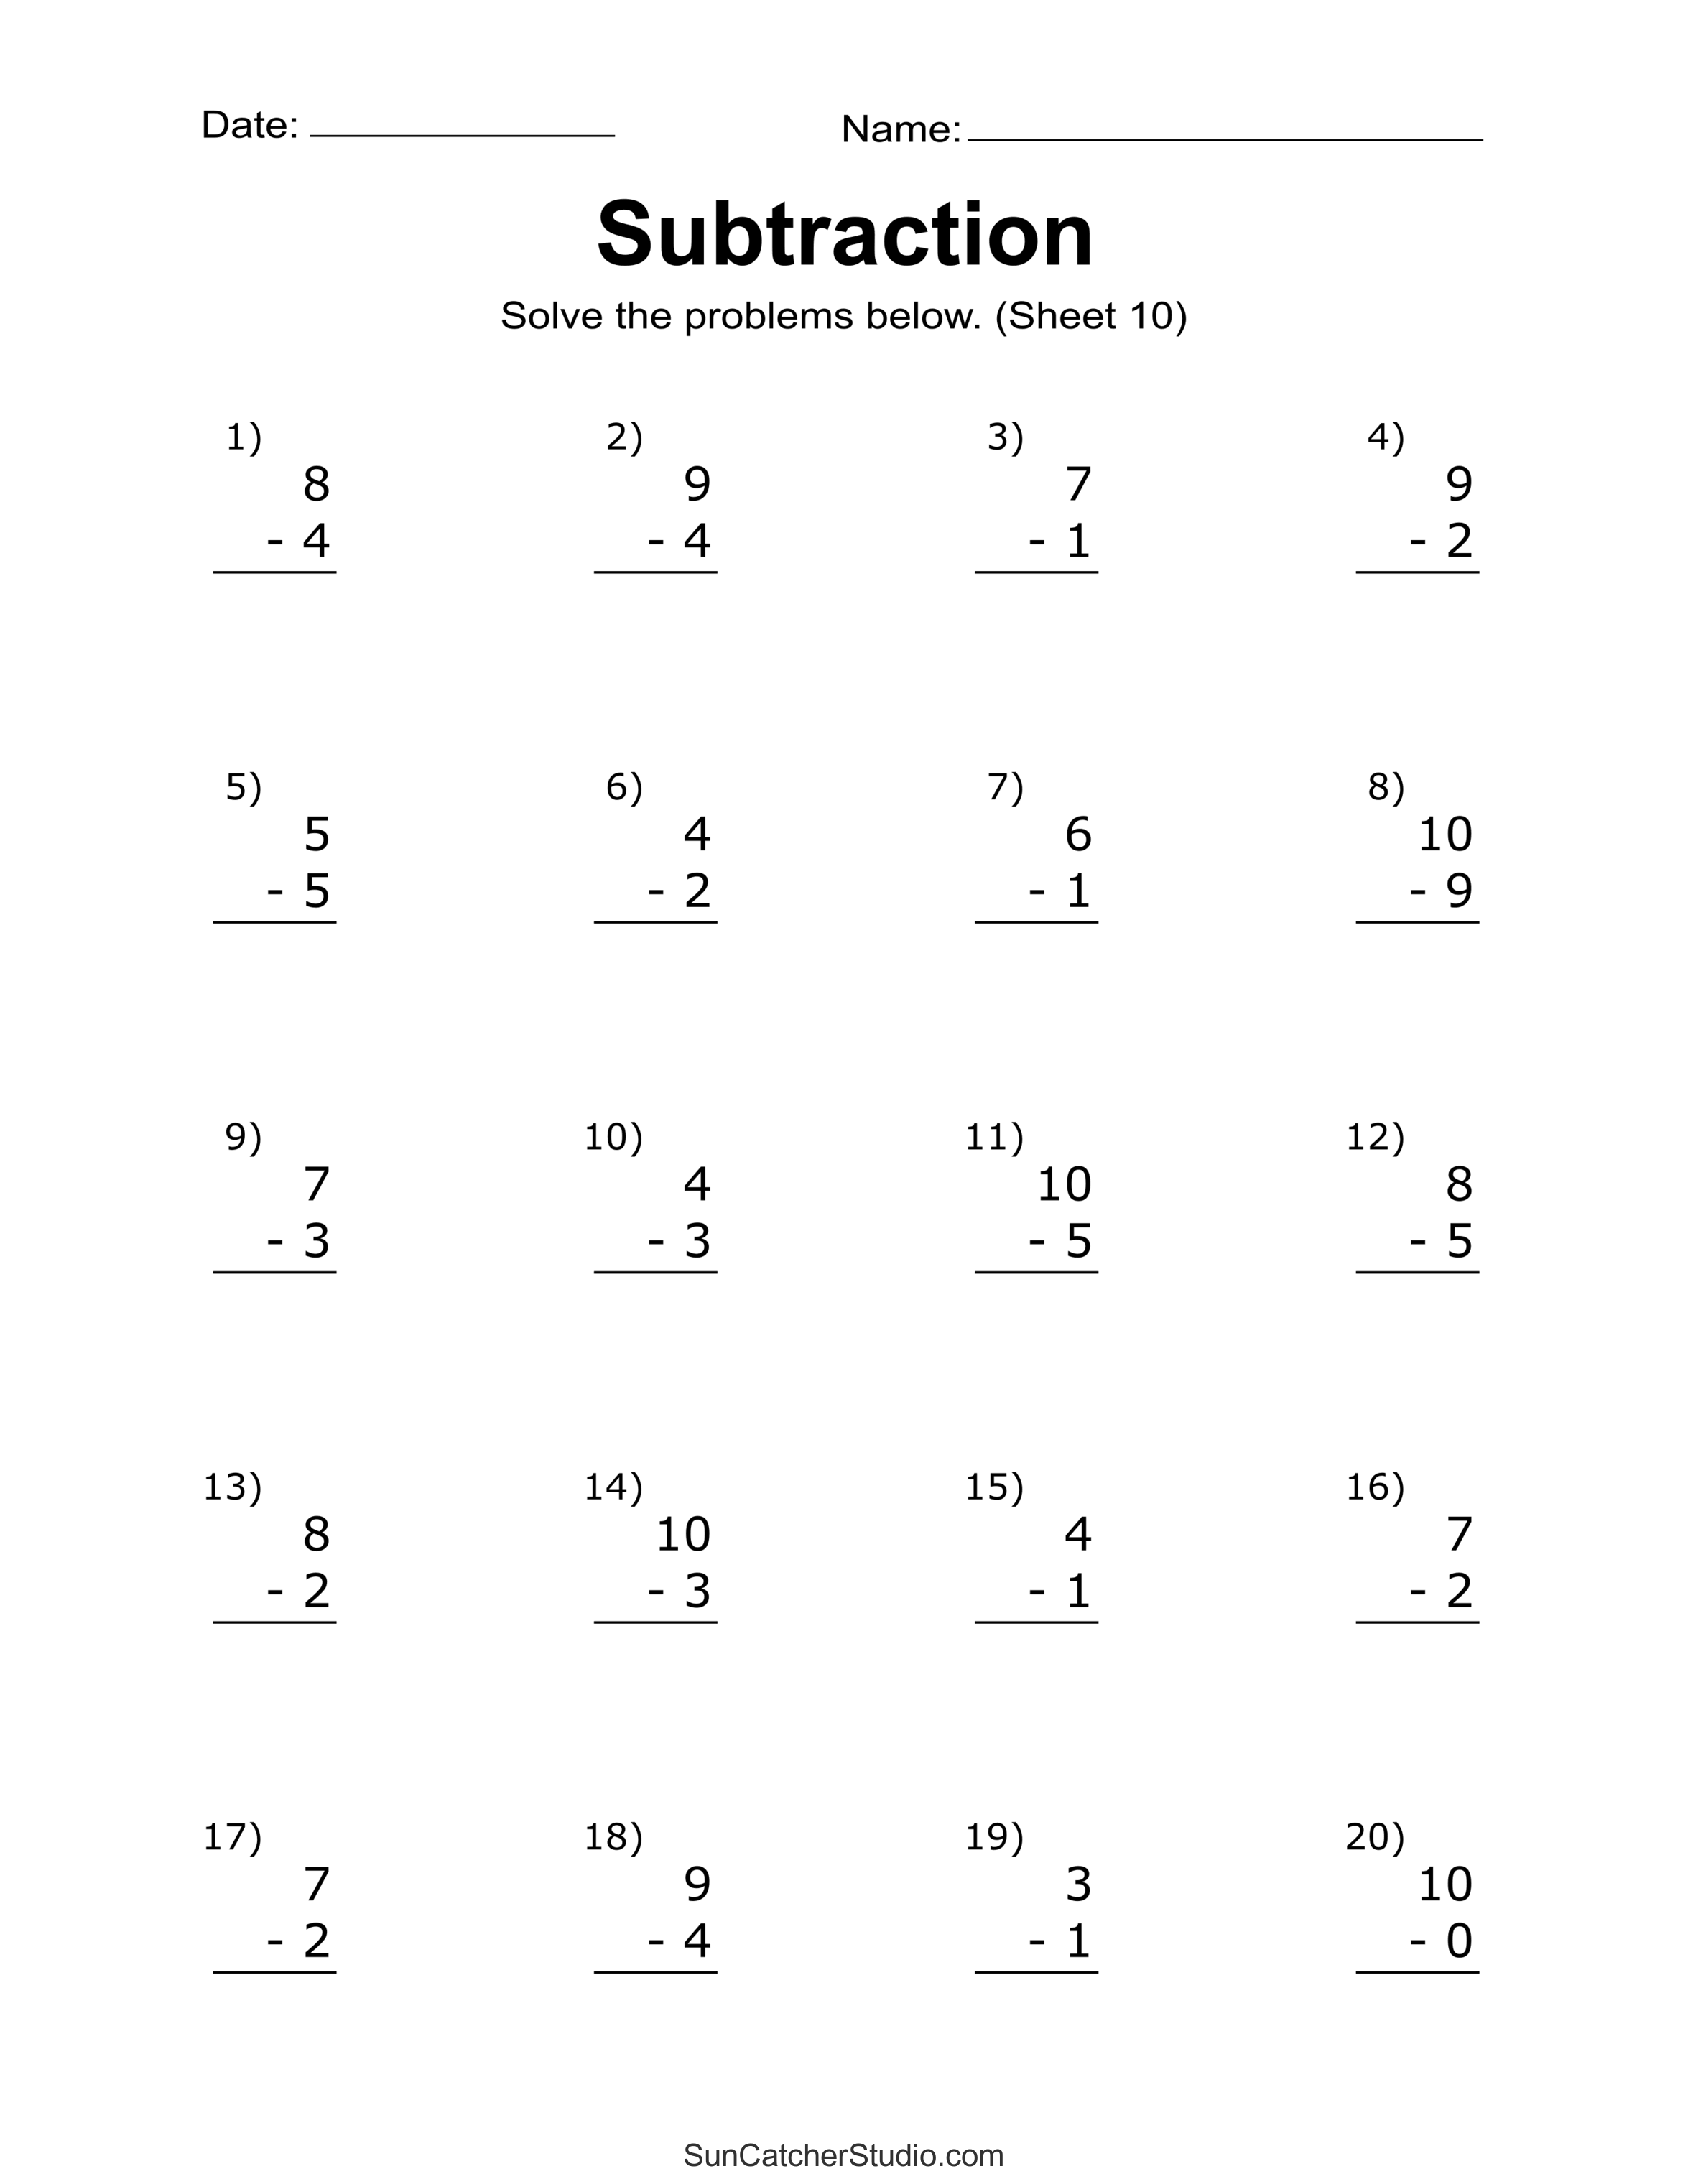 Subtraction under 20 (horizontal) worksheets